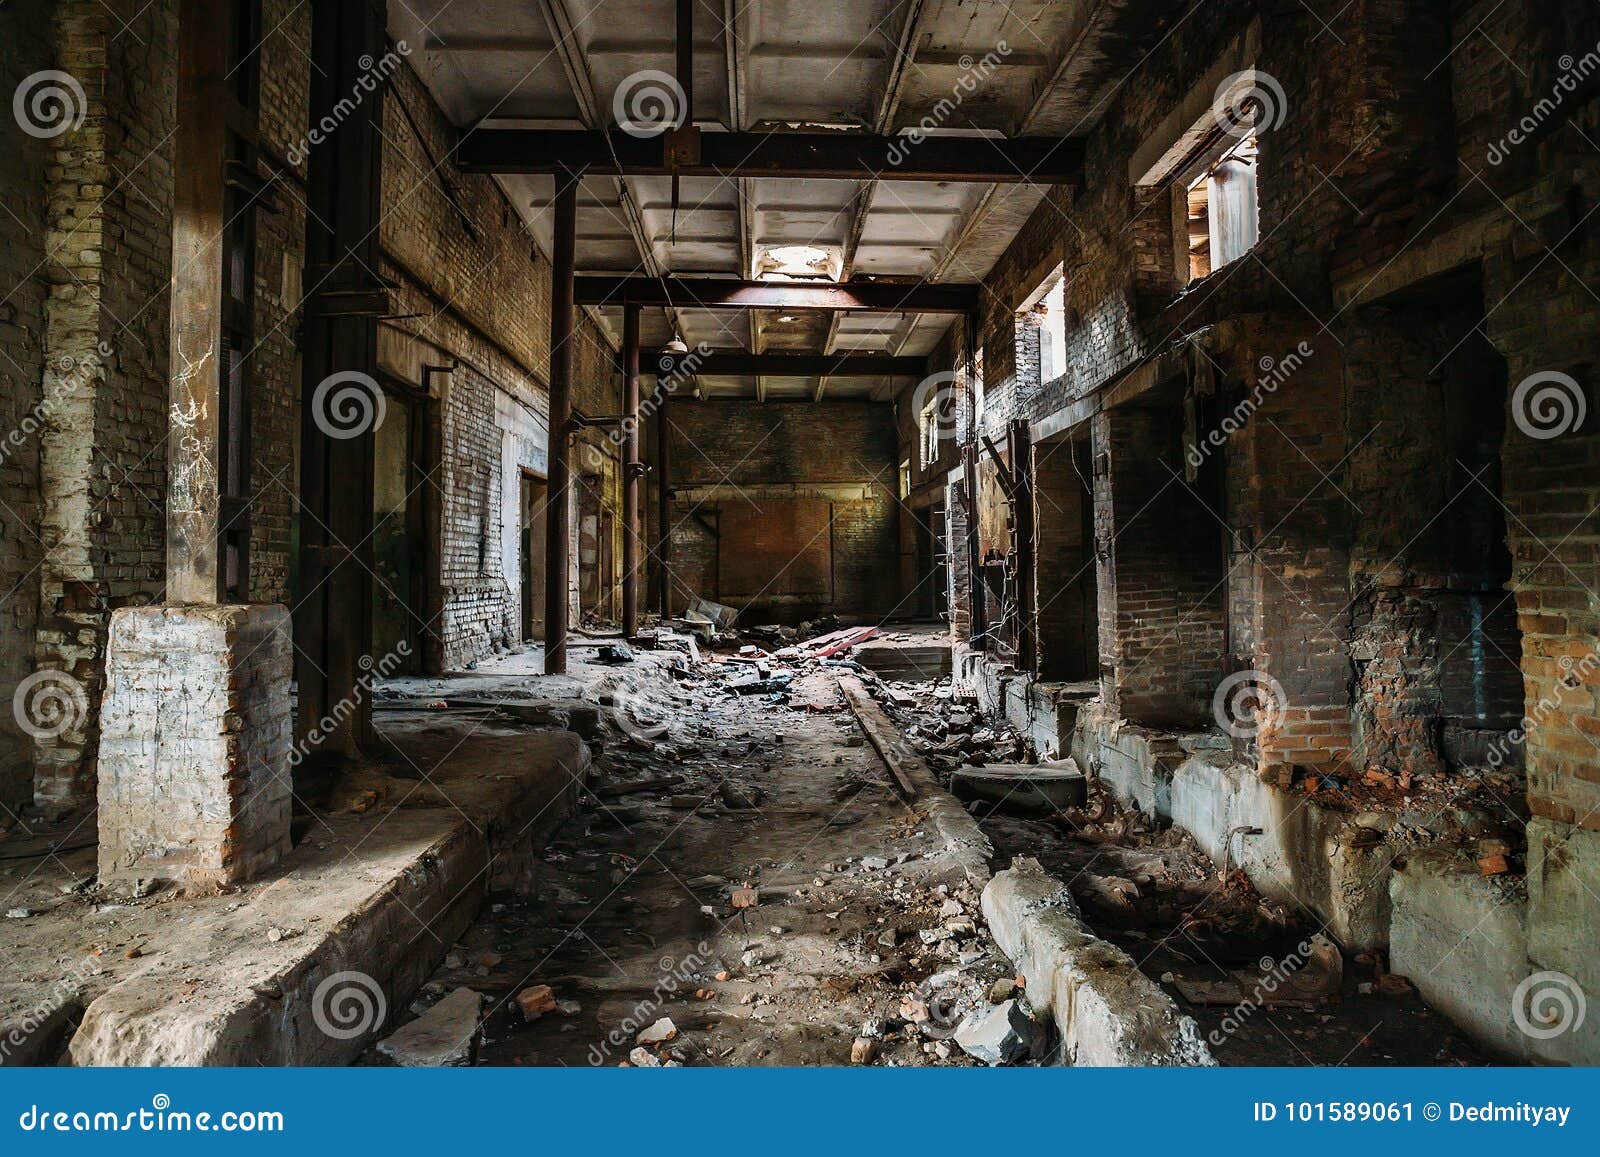 dark scary corridor in abandoned industrial ruined brick factory, creepy interior, perspective